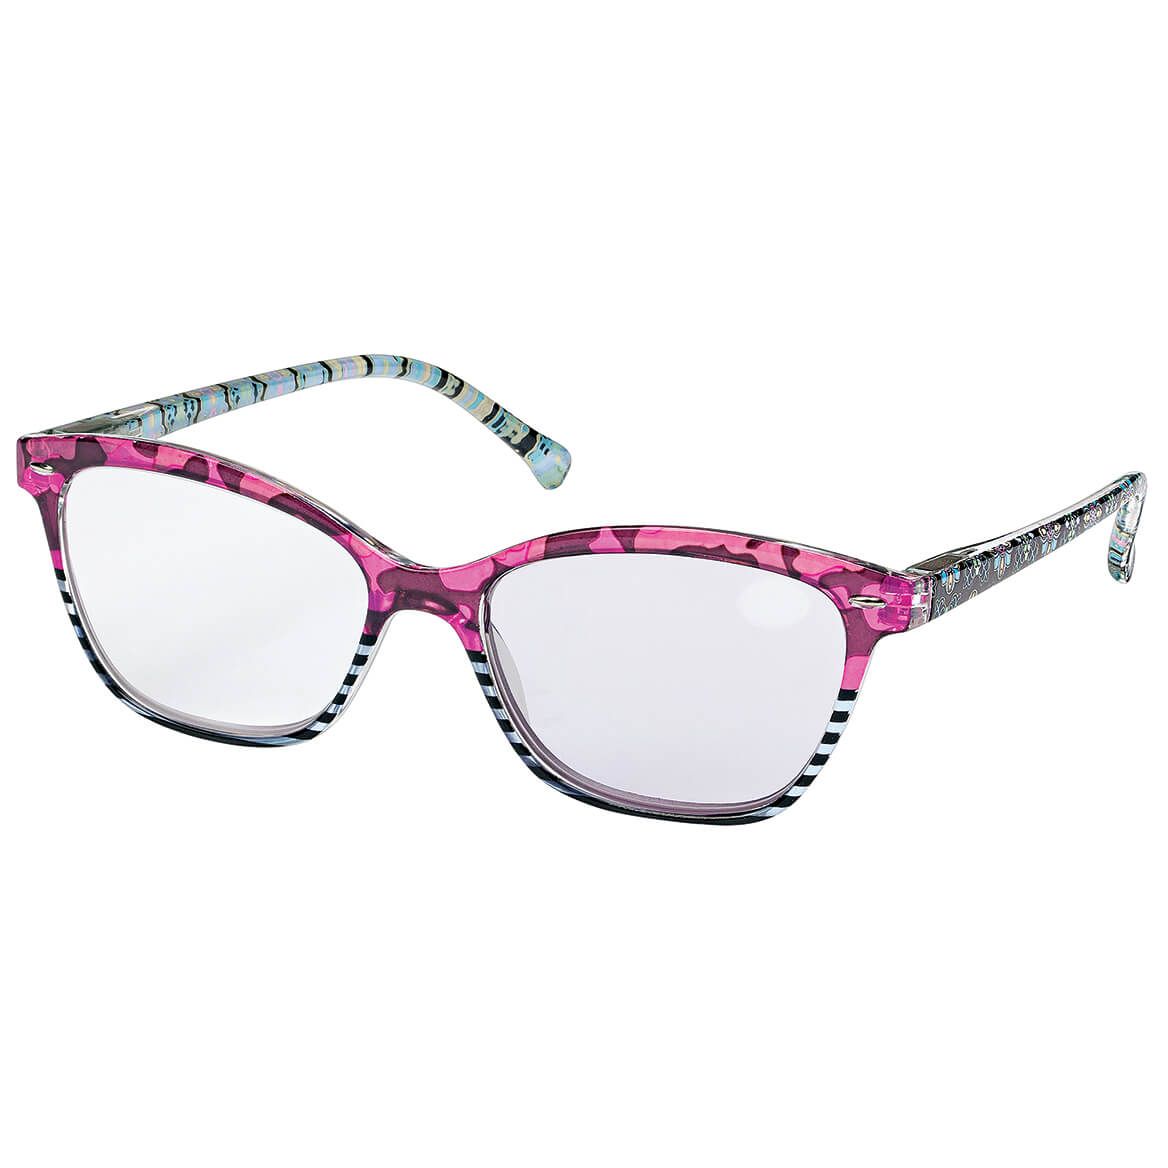 Women's Photochromatic Reading Glasses + '-' + 376967